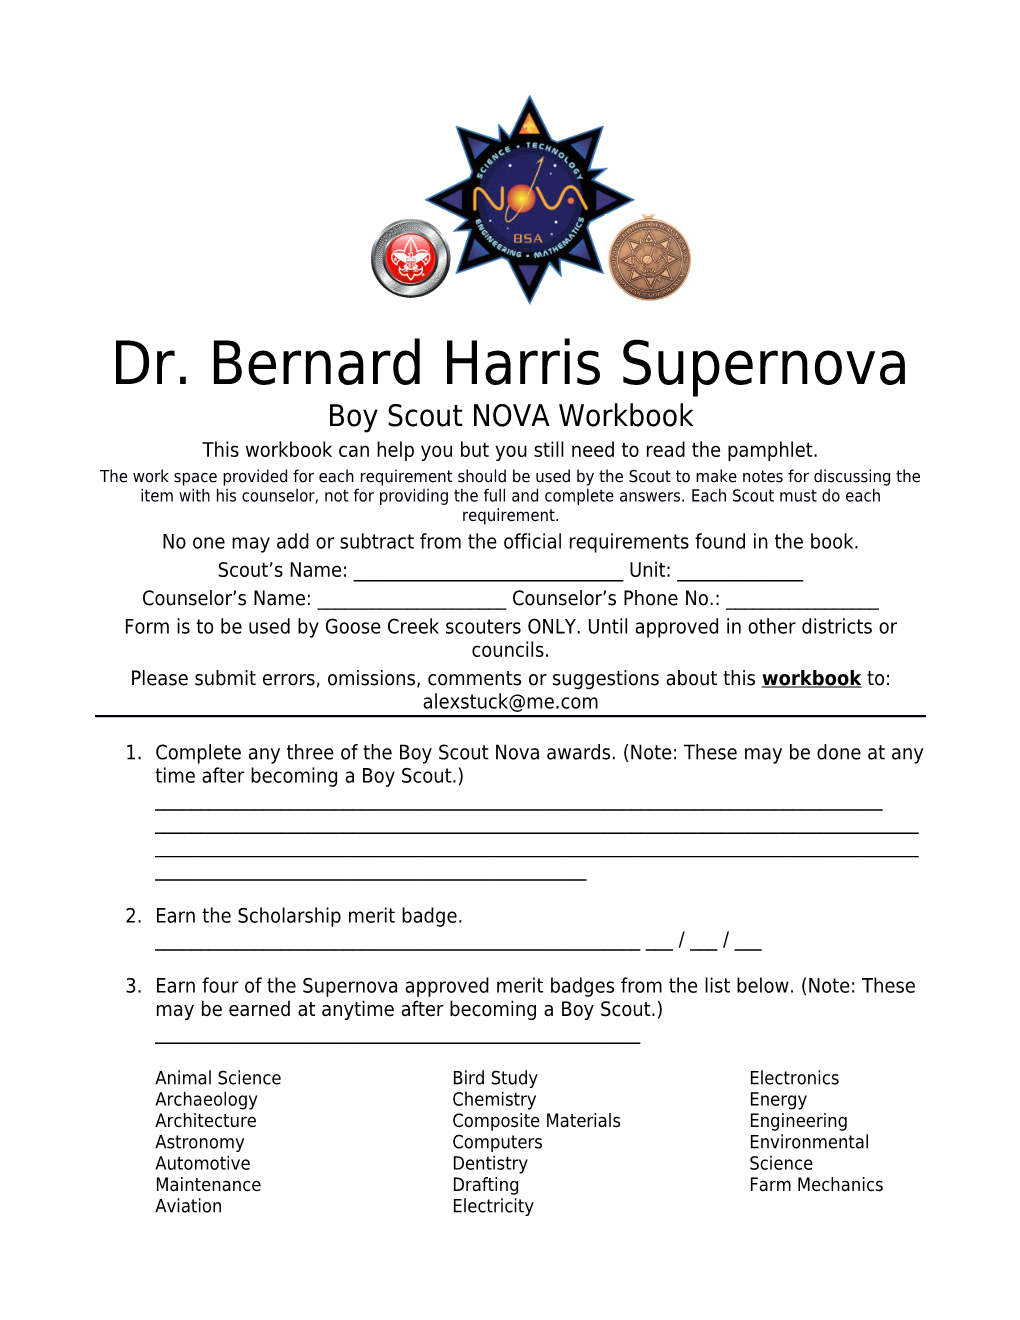 Dr. Bernard Harris Supernova